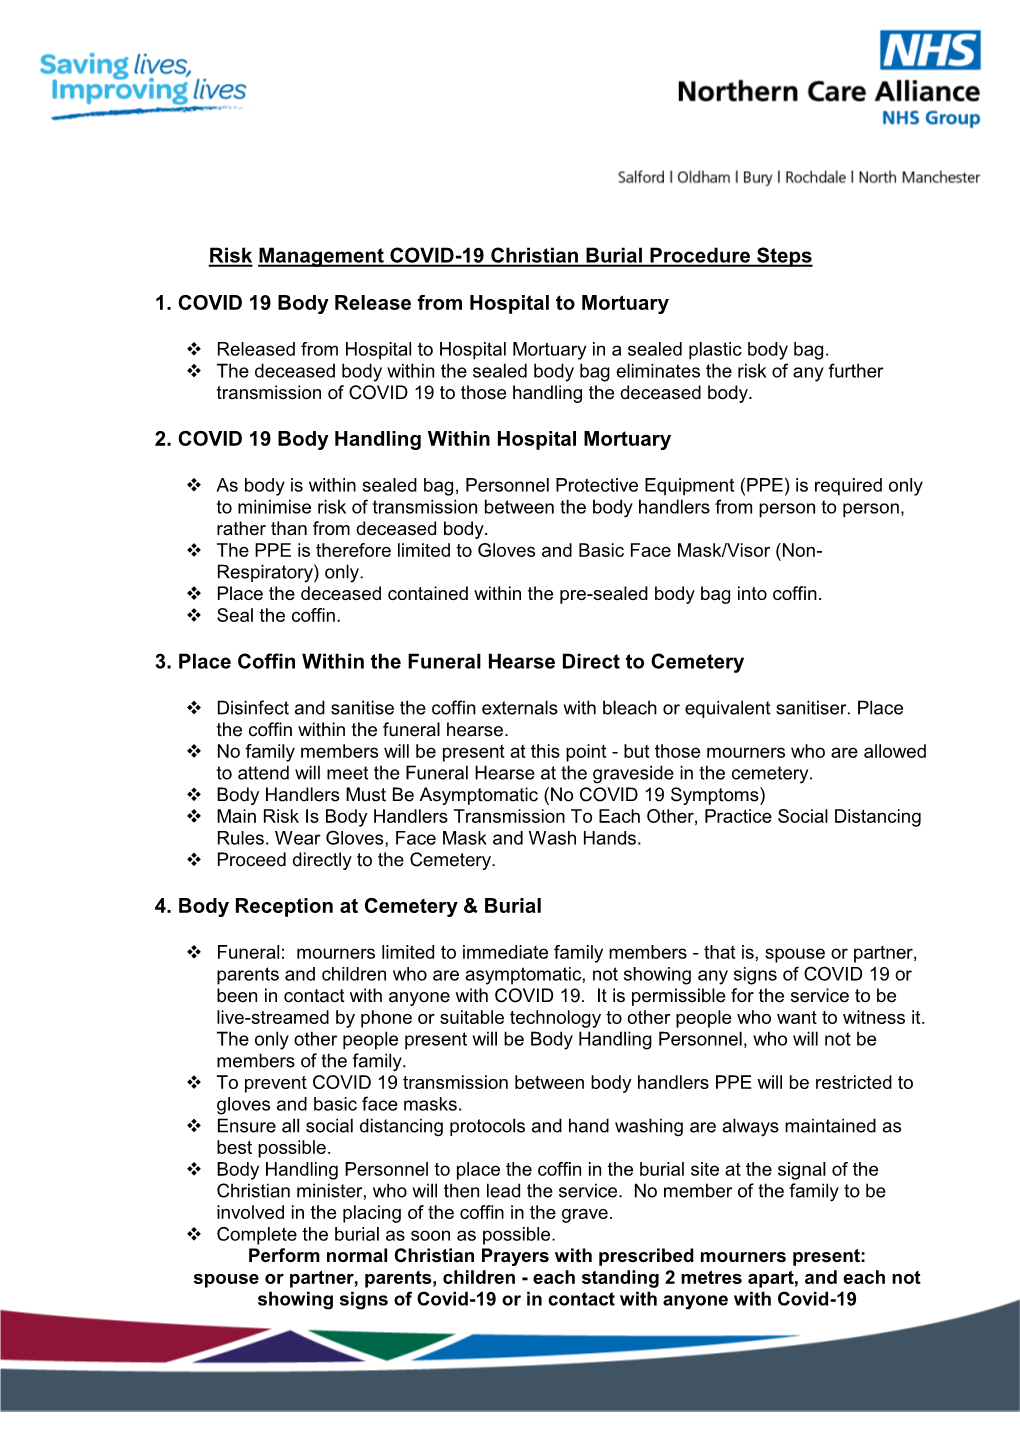 Christian Burial Procedure Steps COVID19